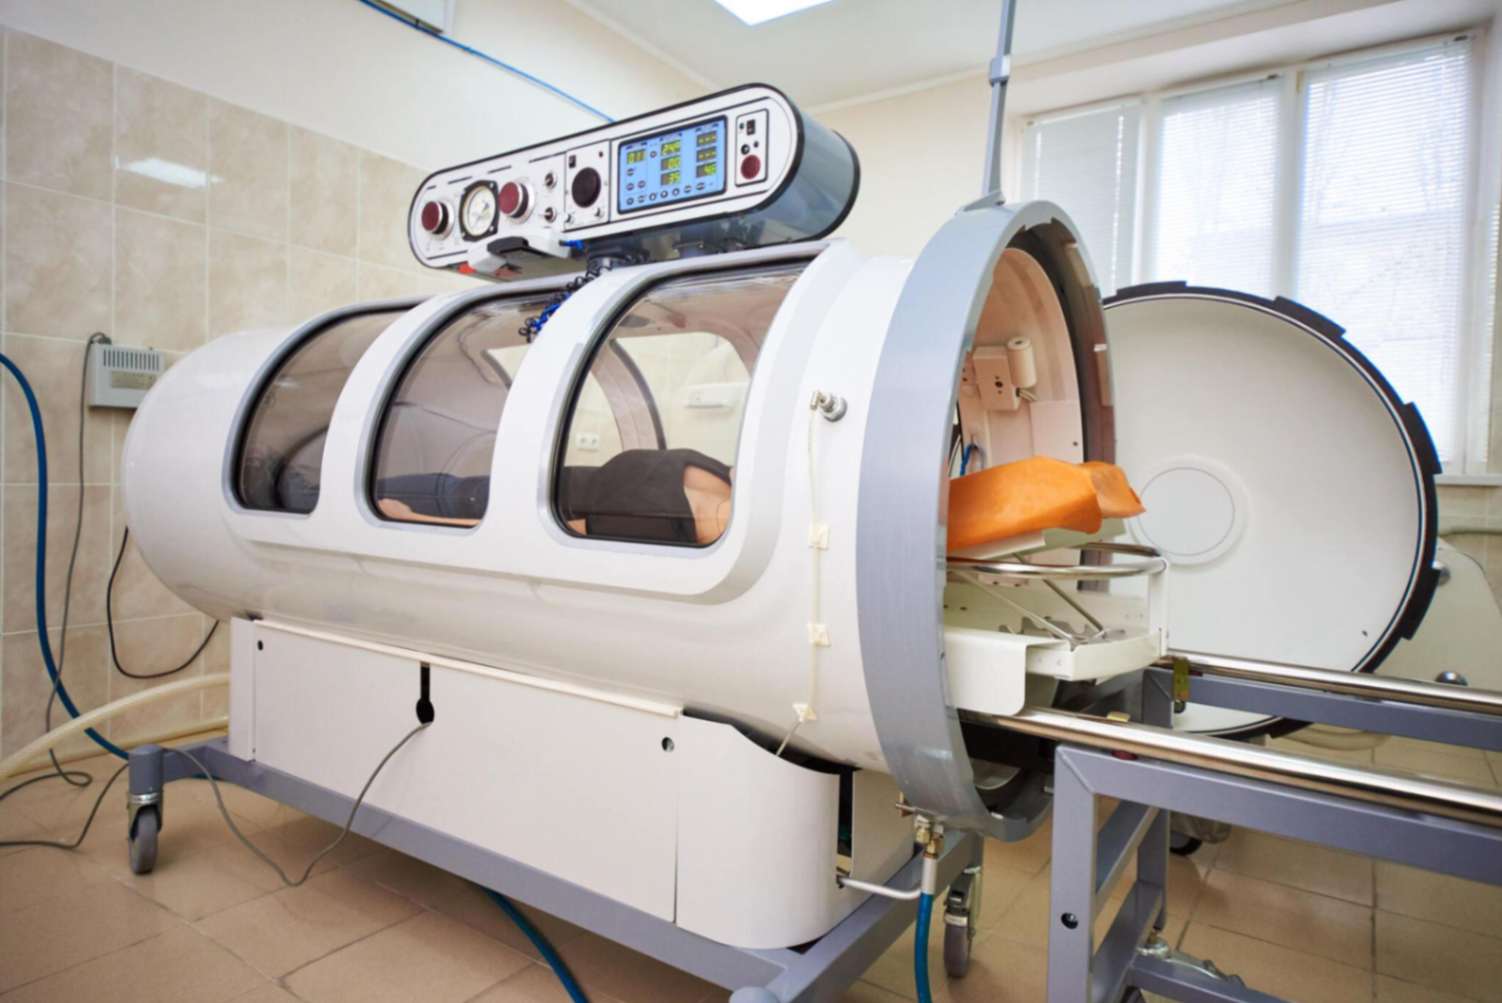 Hyperbaric oxygen chambers